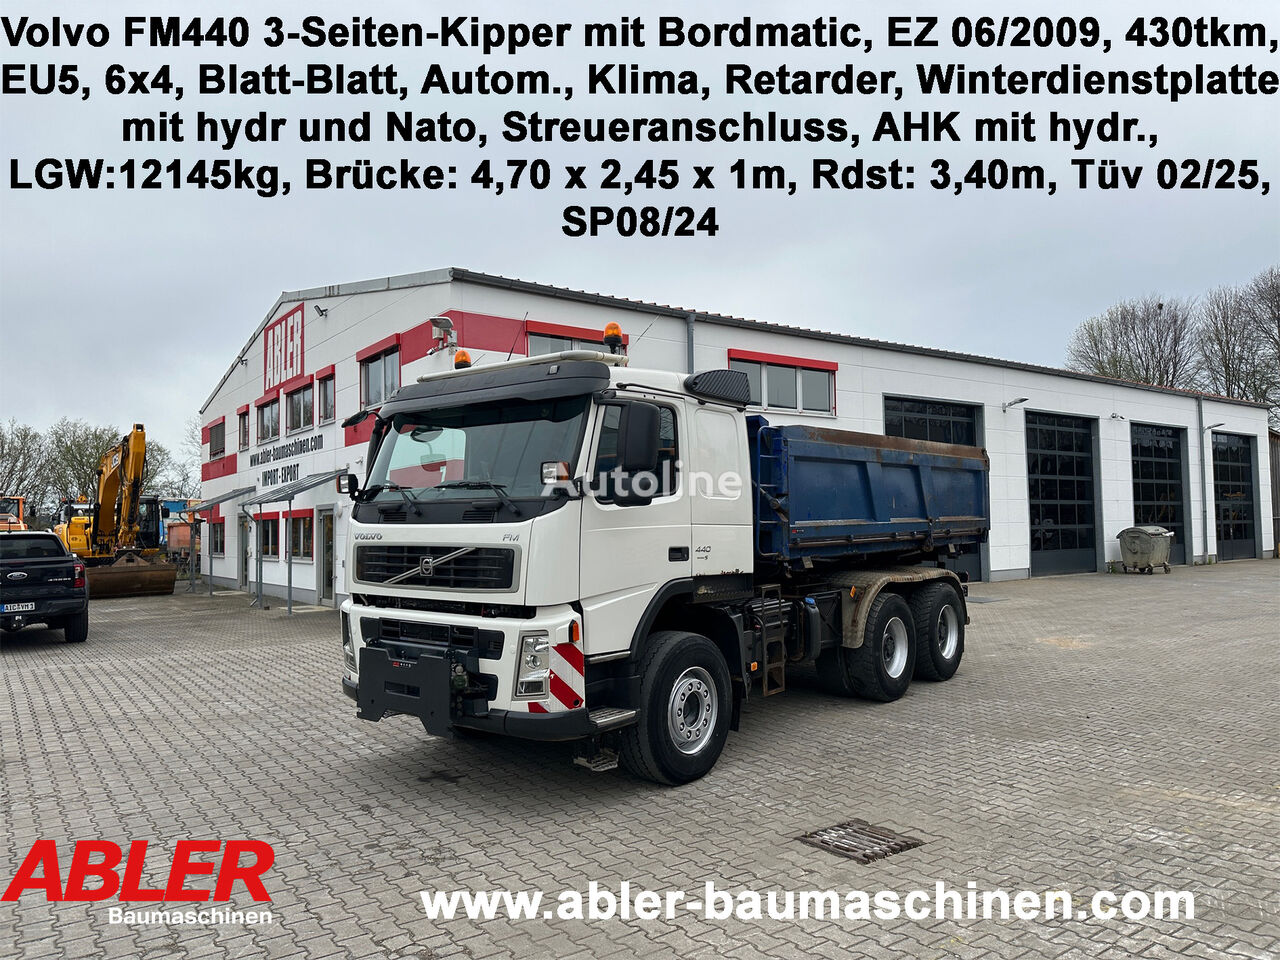 کامیون کمپرسی Volvo FM440 3-Seiten-Kipper mit Bordmatic Winterdienst AHK Hydraulik D